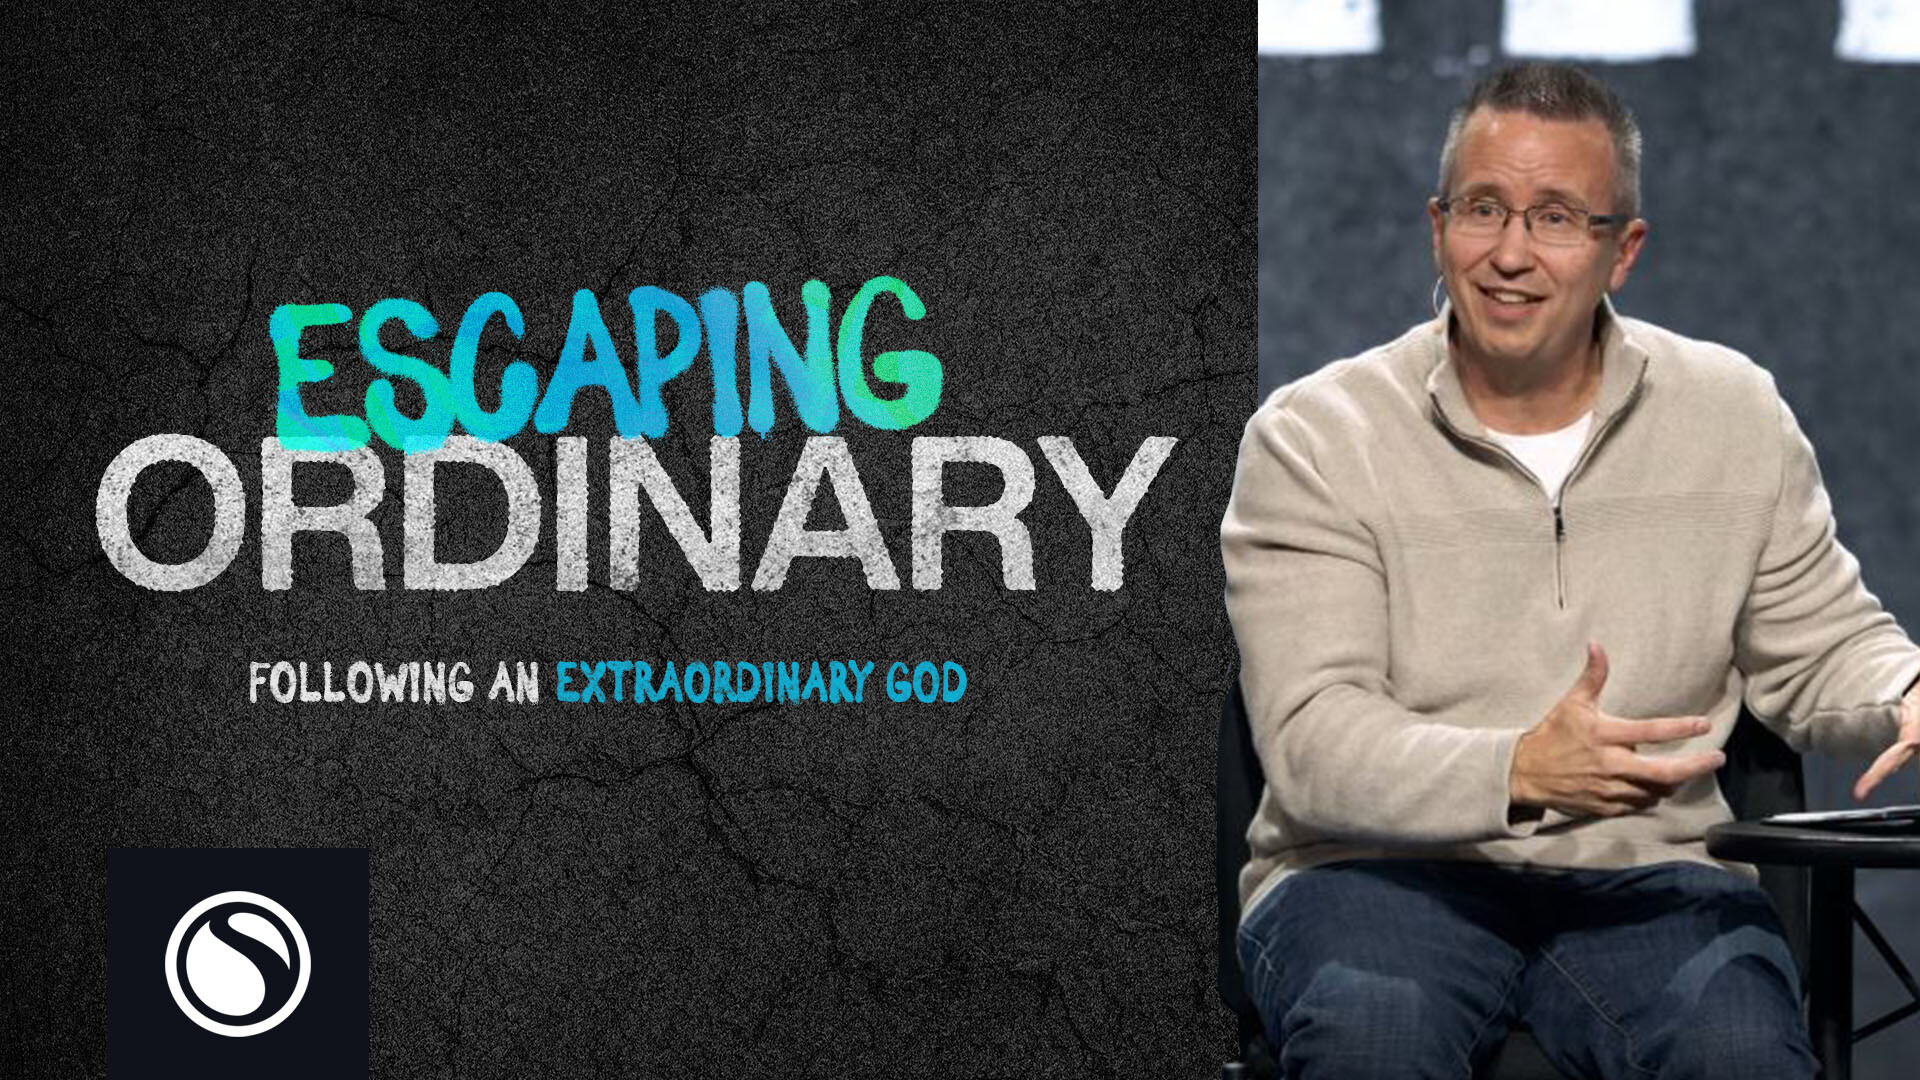 Watch Escaping Ordinary - Following an Extraordinary God